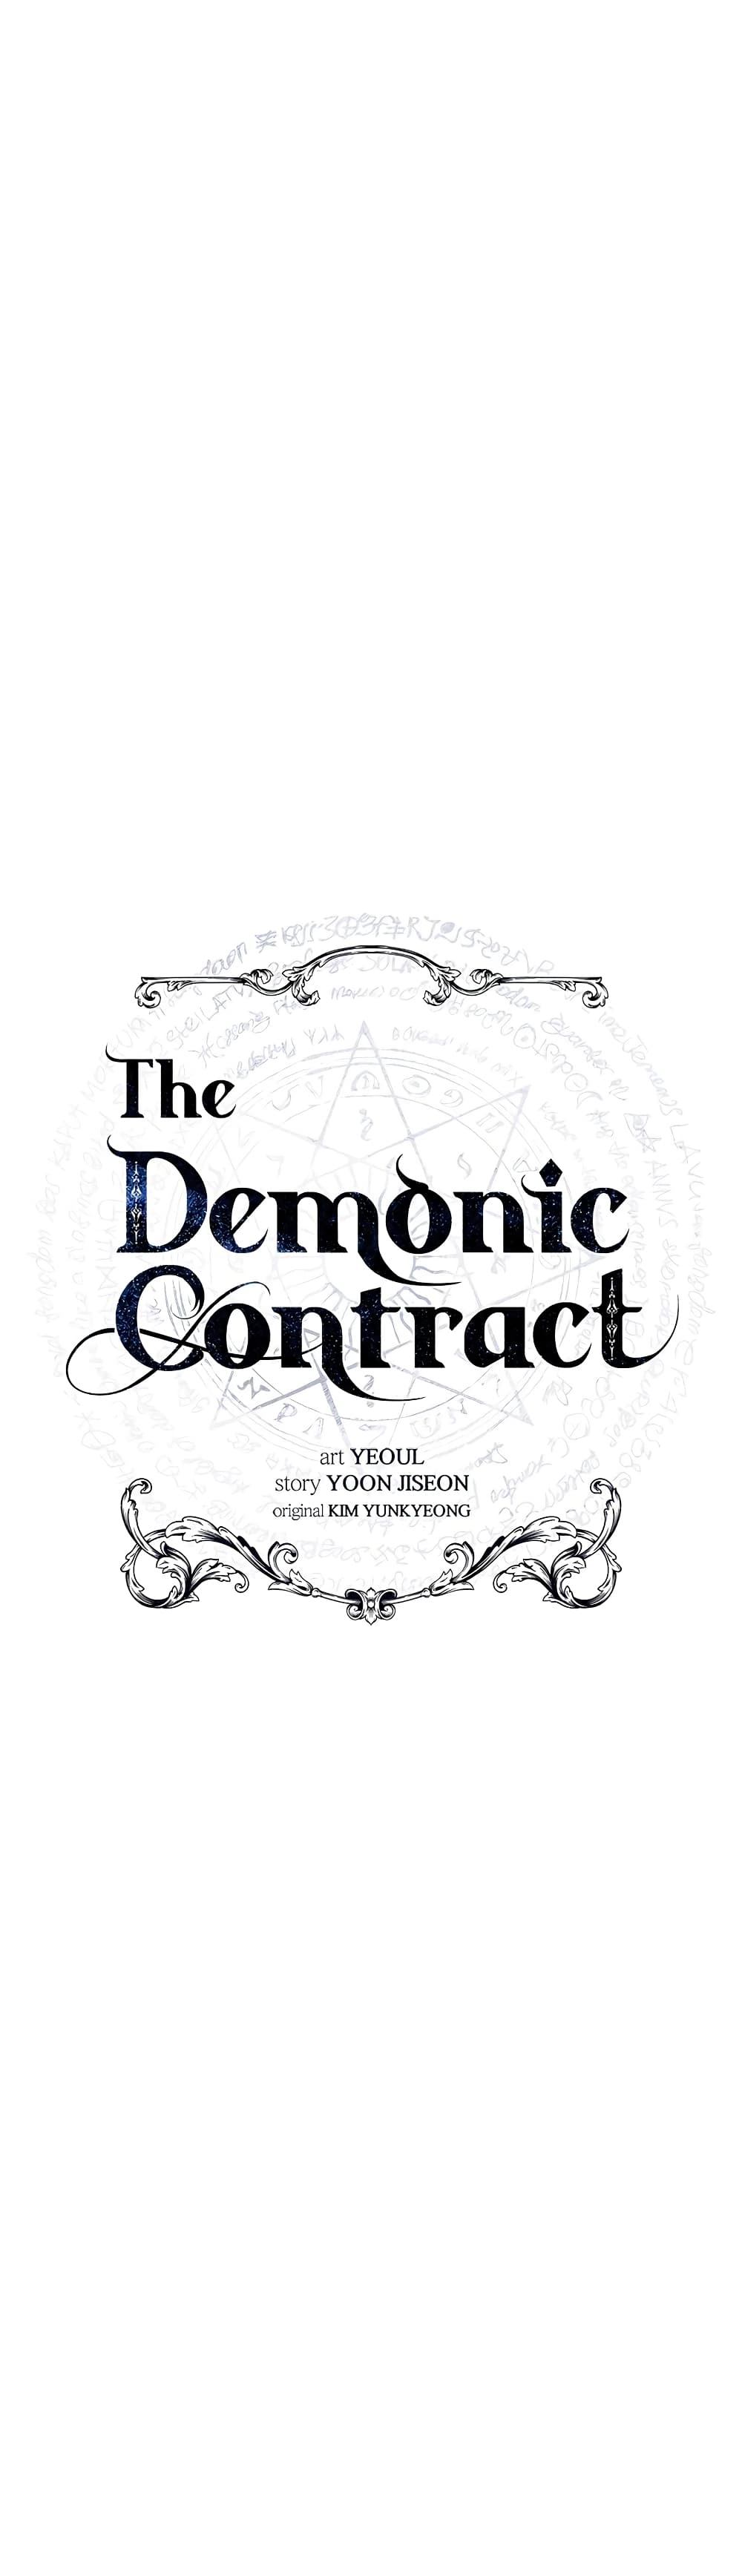 The Demonic Contract 54 (5)